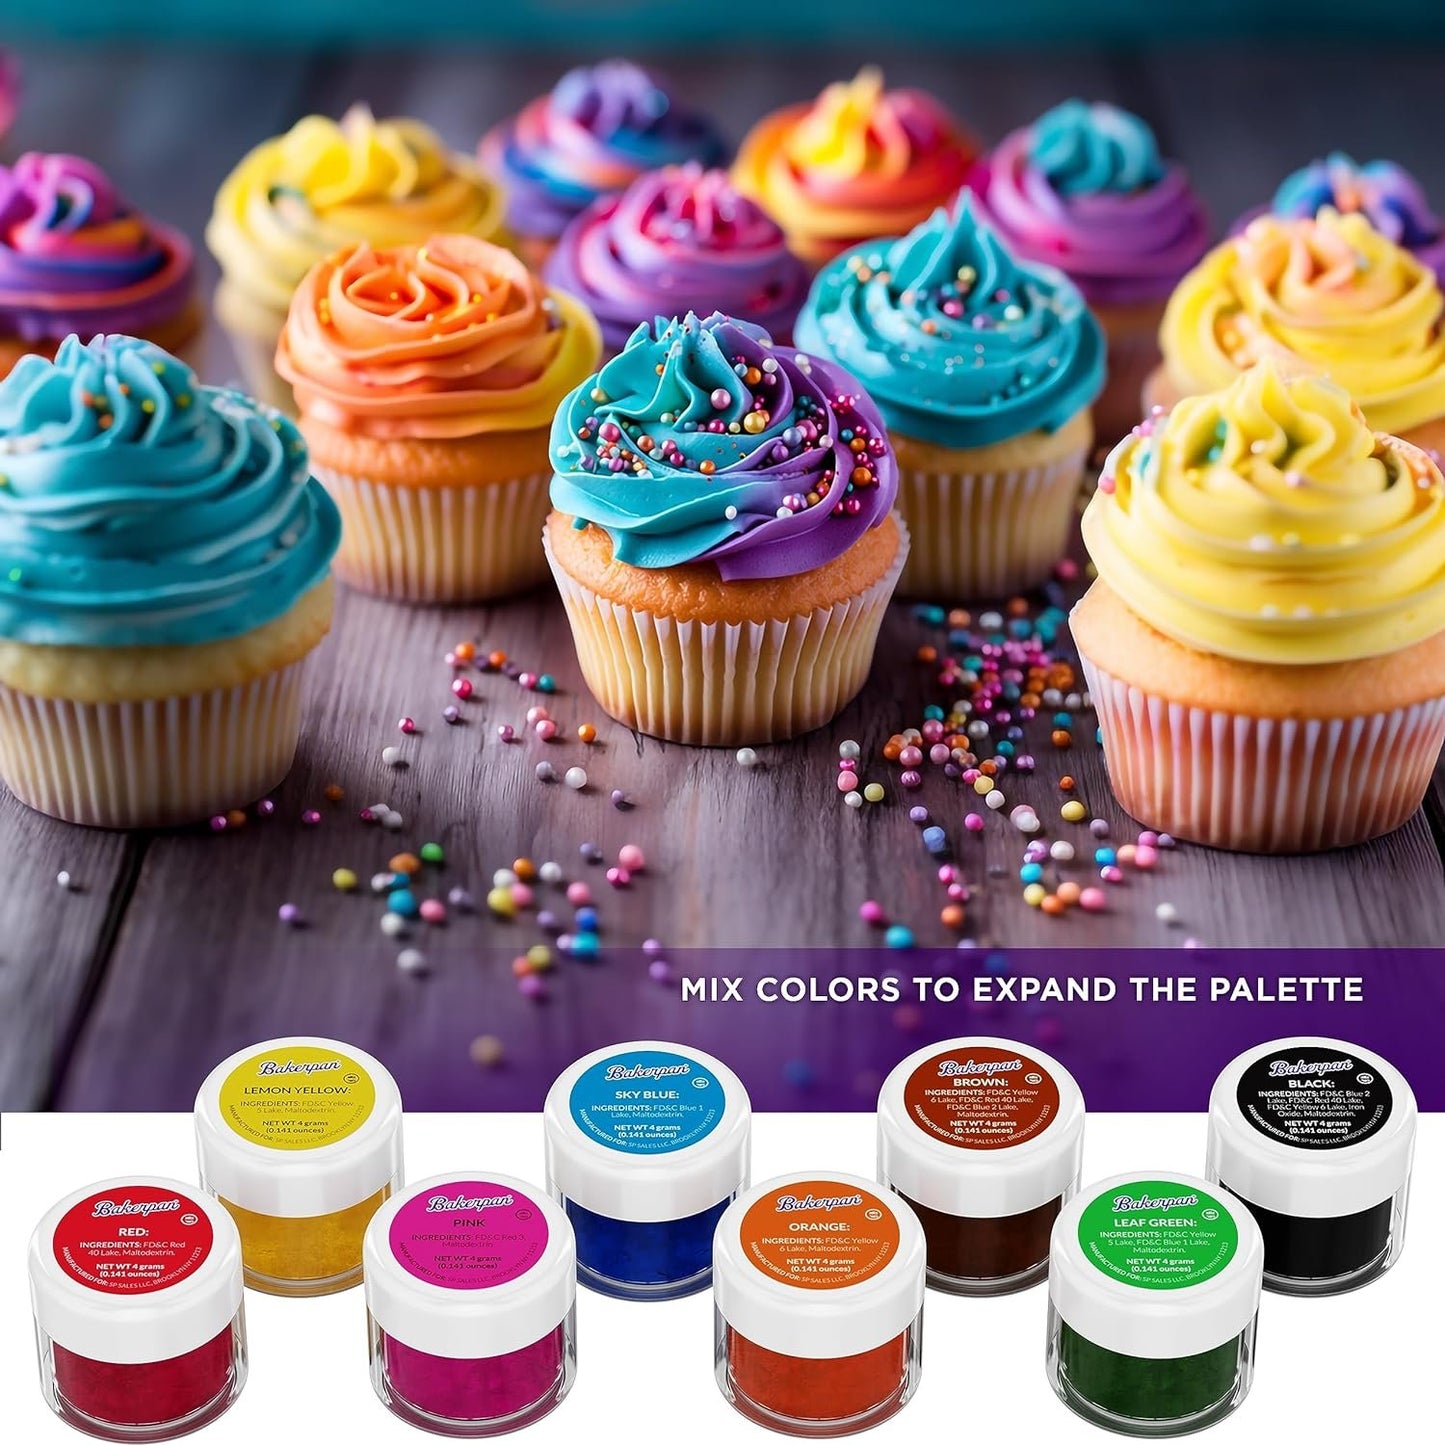 Bakerpan Food Coloring Powder for Baking, Cake Decorating Color Dust, 4g Jars